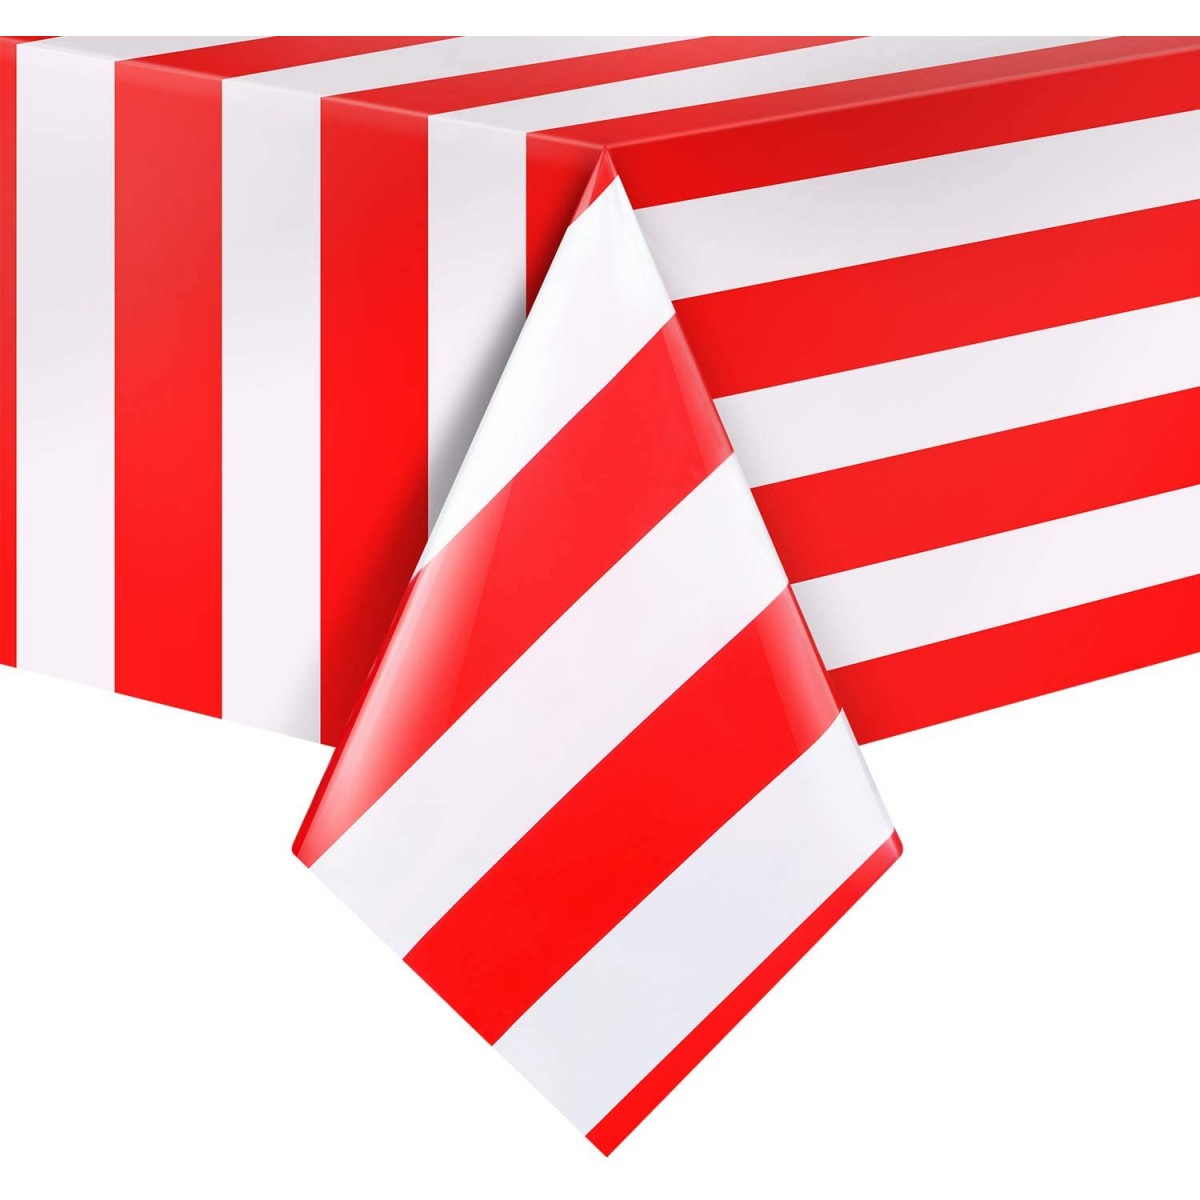 Set da 3 tovaglie a strisce rosse e bianche, in PVC, per feste